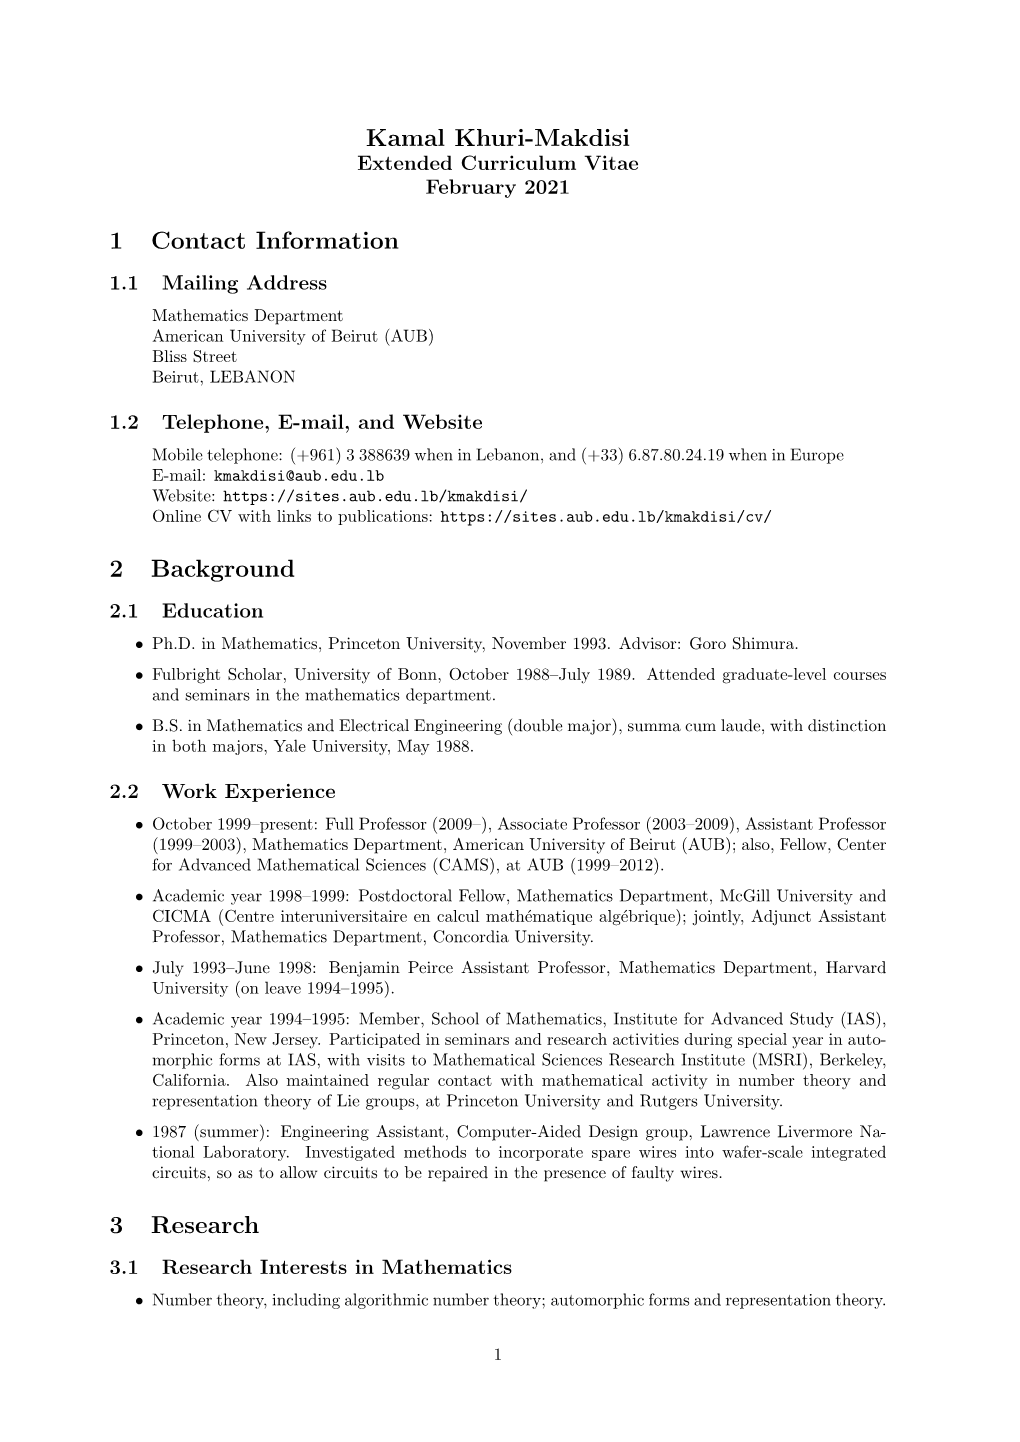 Kamal Khuri-Makdisi 1 Contact Information 2 Background 3 Research